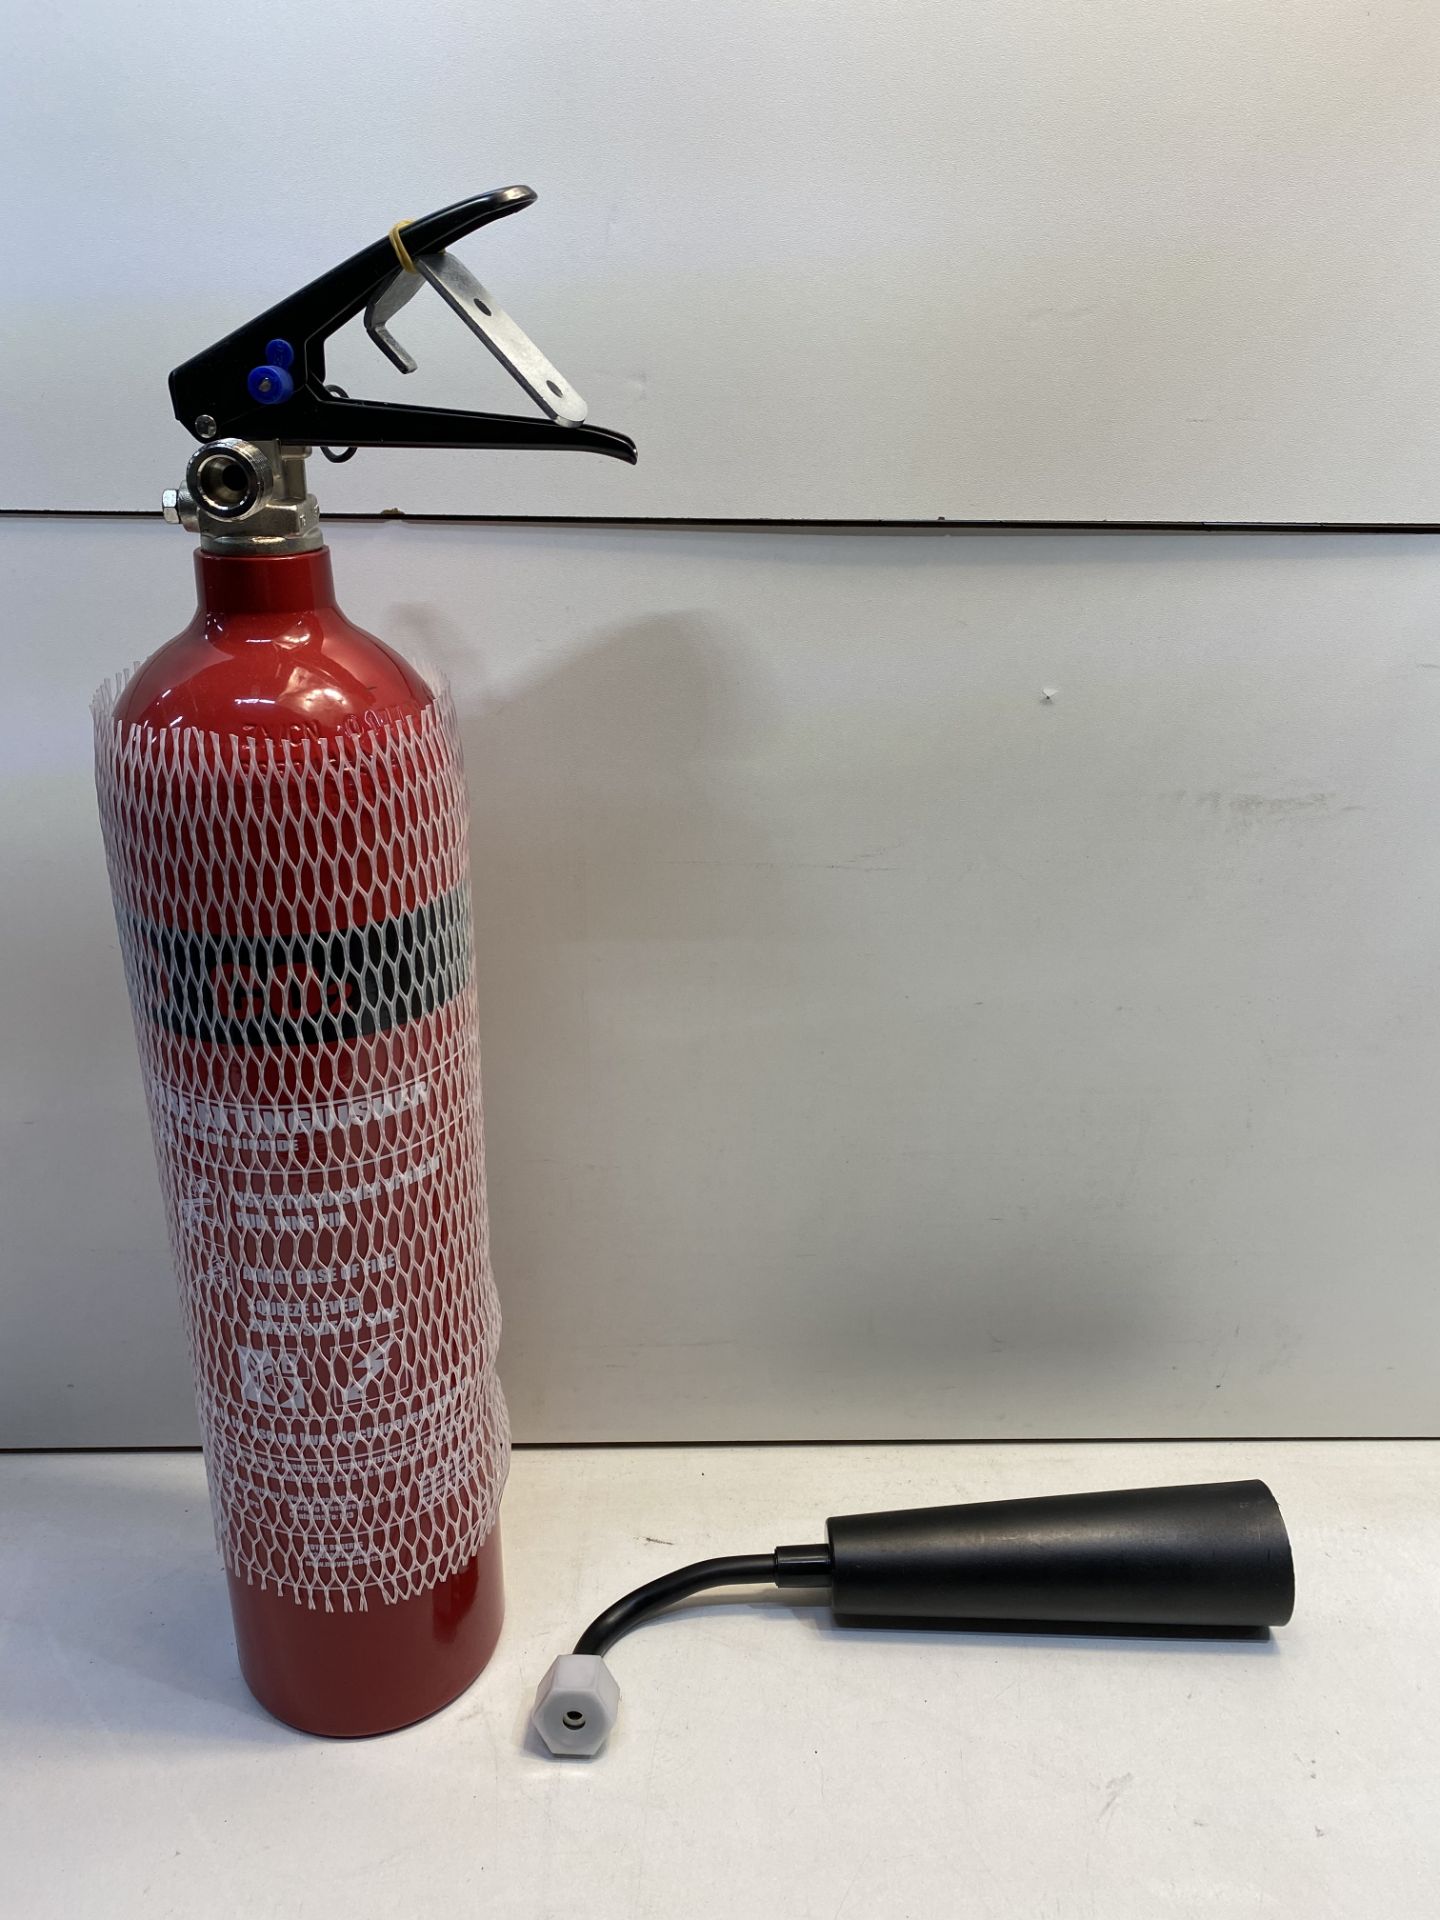 2KG C02 Fire Extinguisher Kit - Image 2 of 6